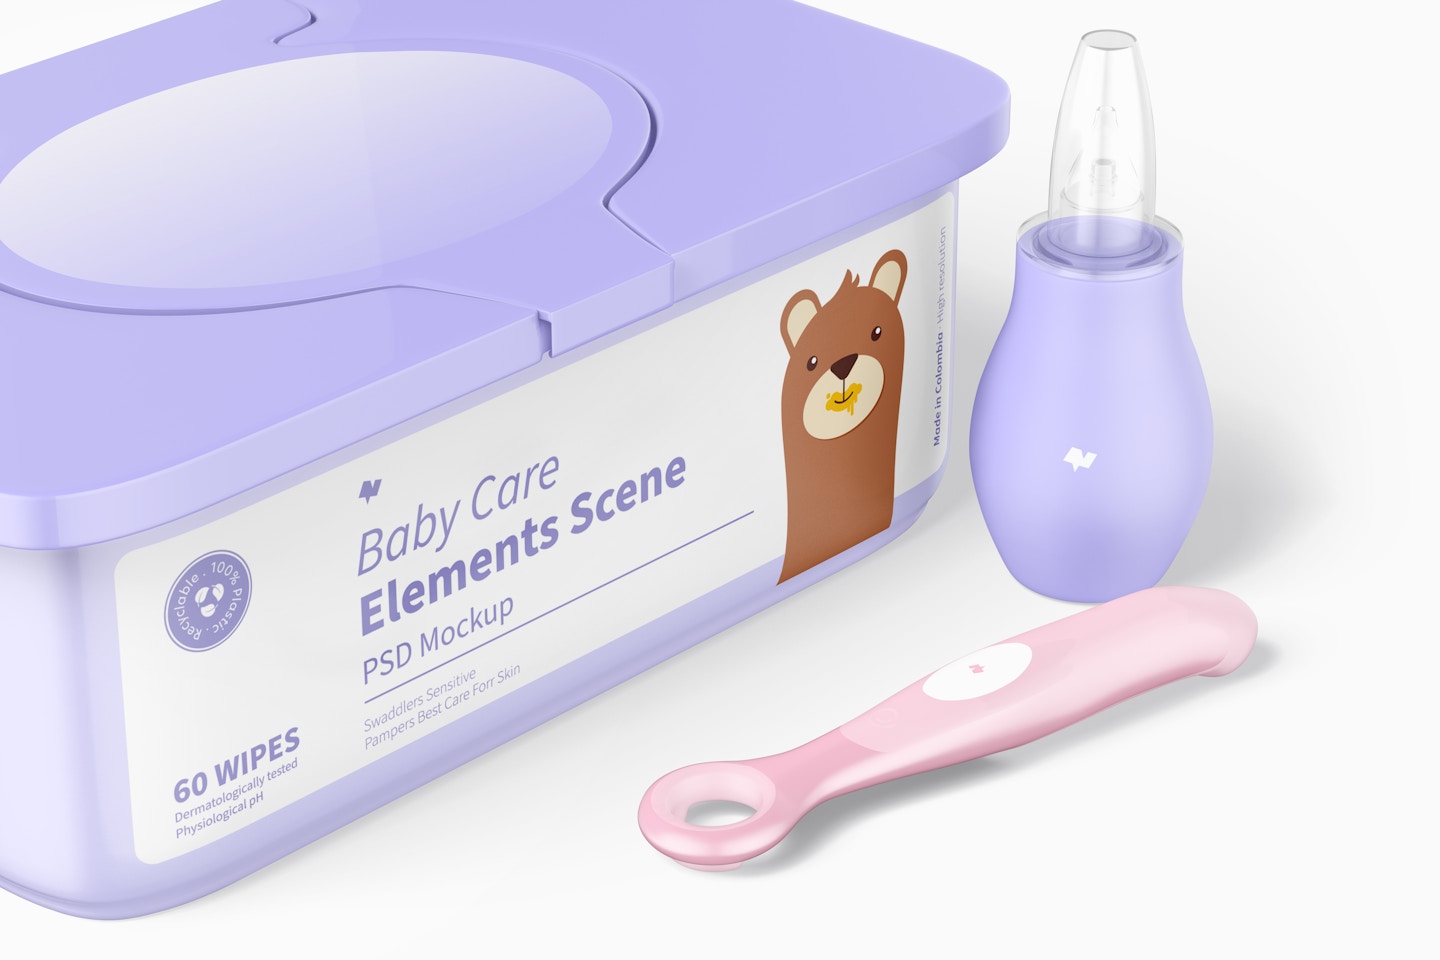 Baby Care Elements Scene Mockup, Close Up